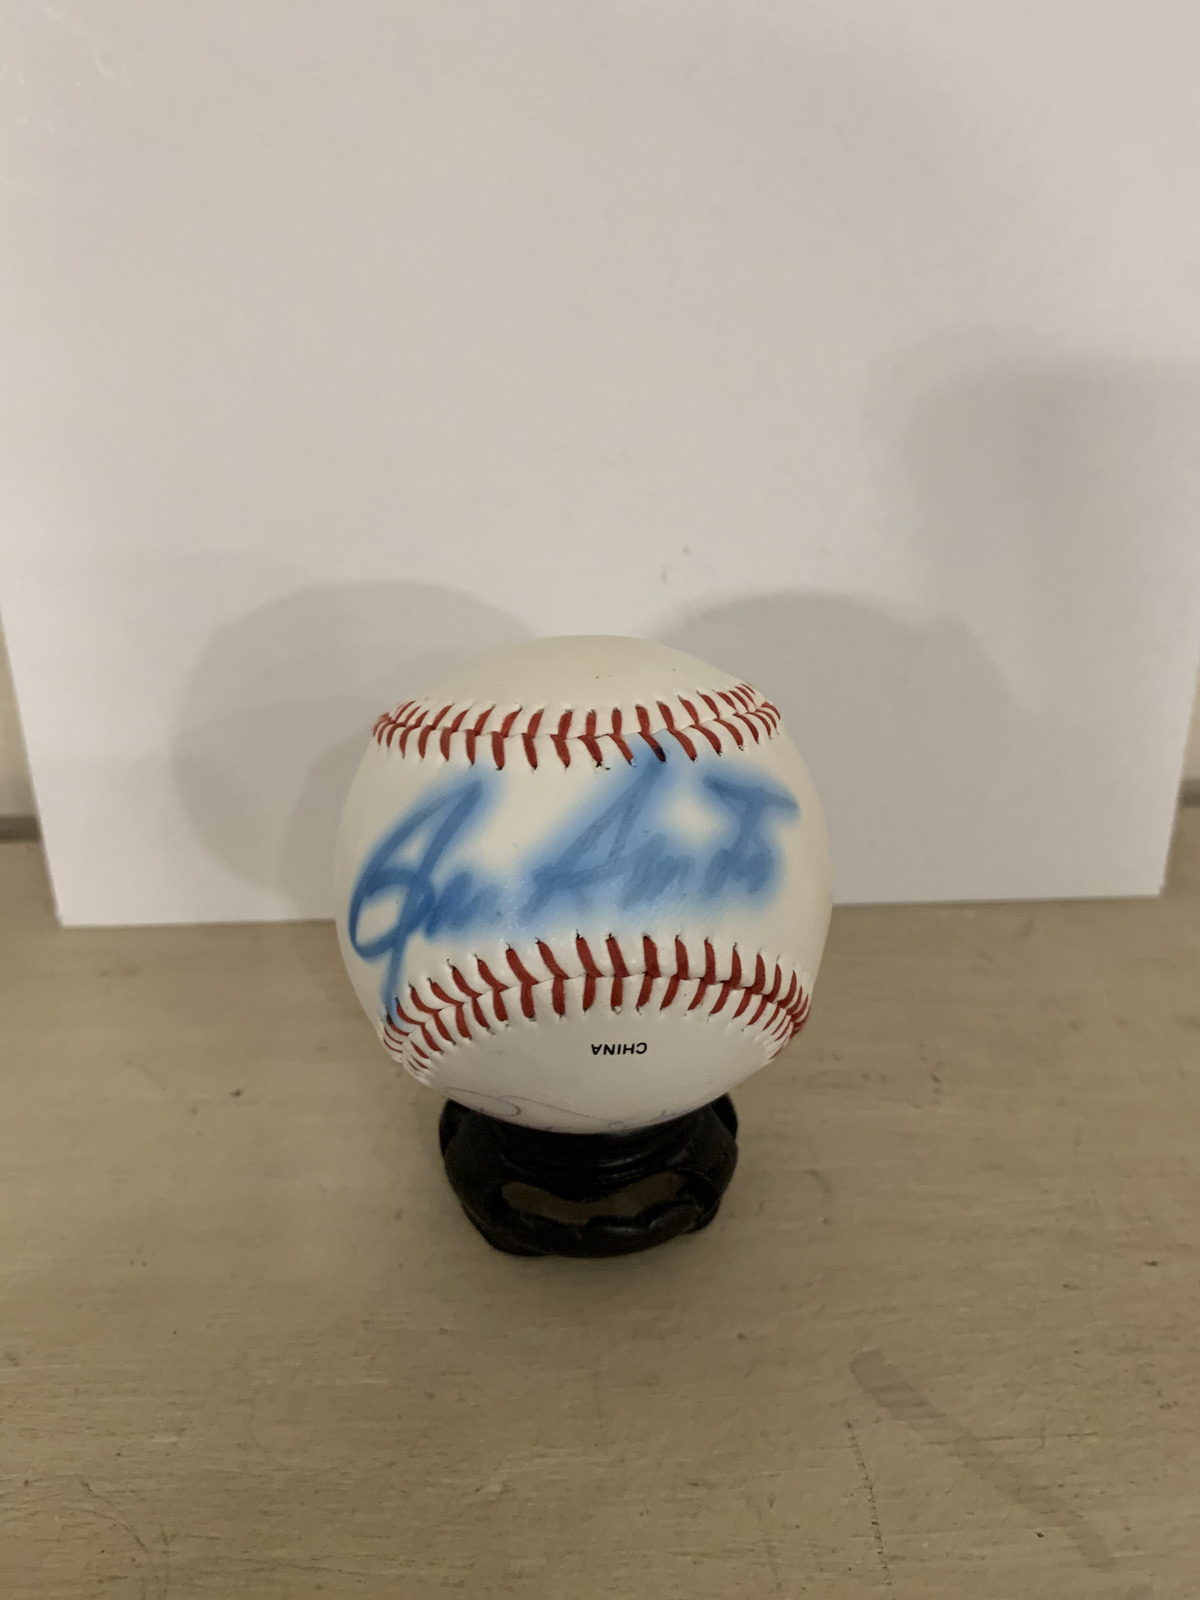 Chicago Cubs Ron Santo / Ryan Dempster - Autograph Baseball - Signed At Ballpark